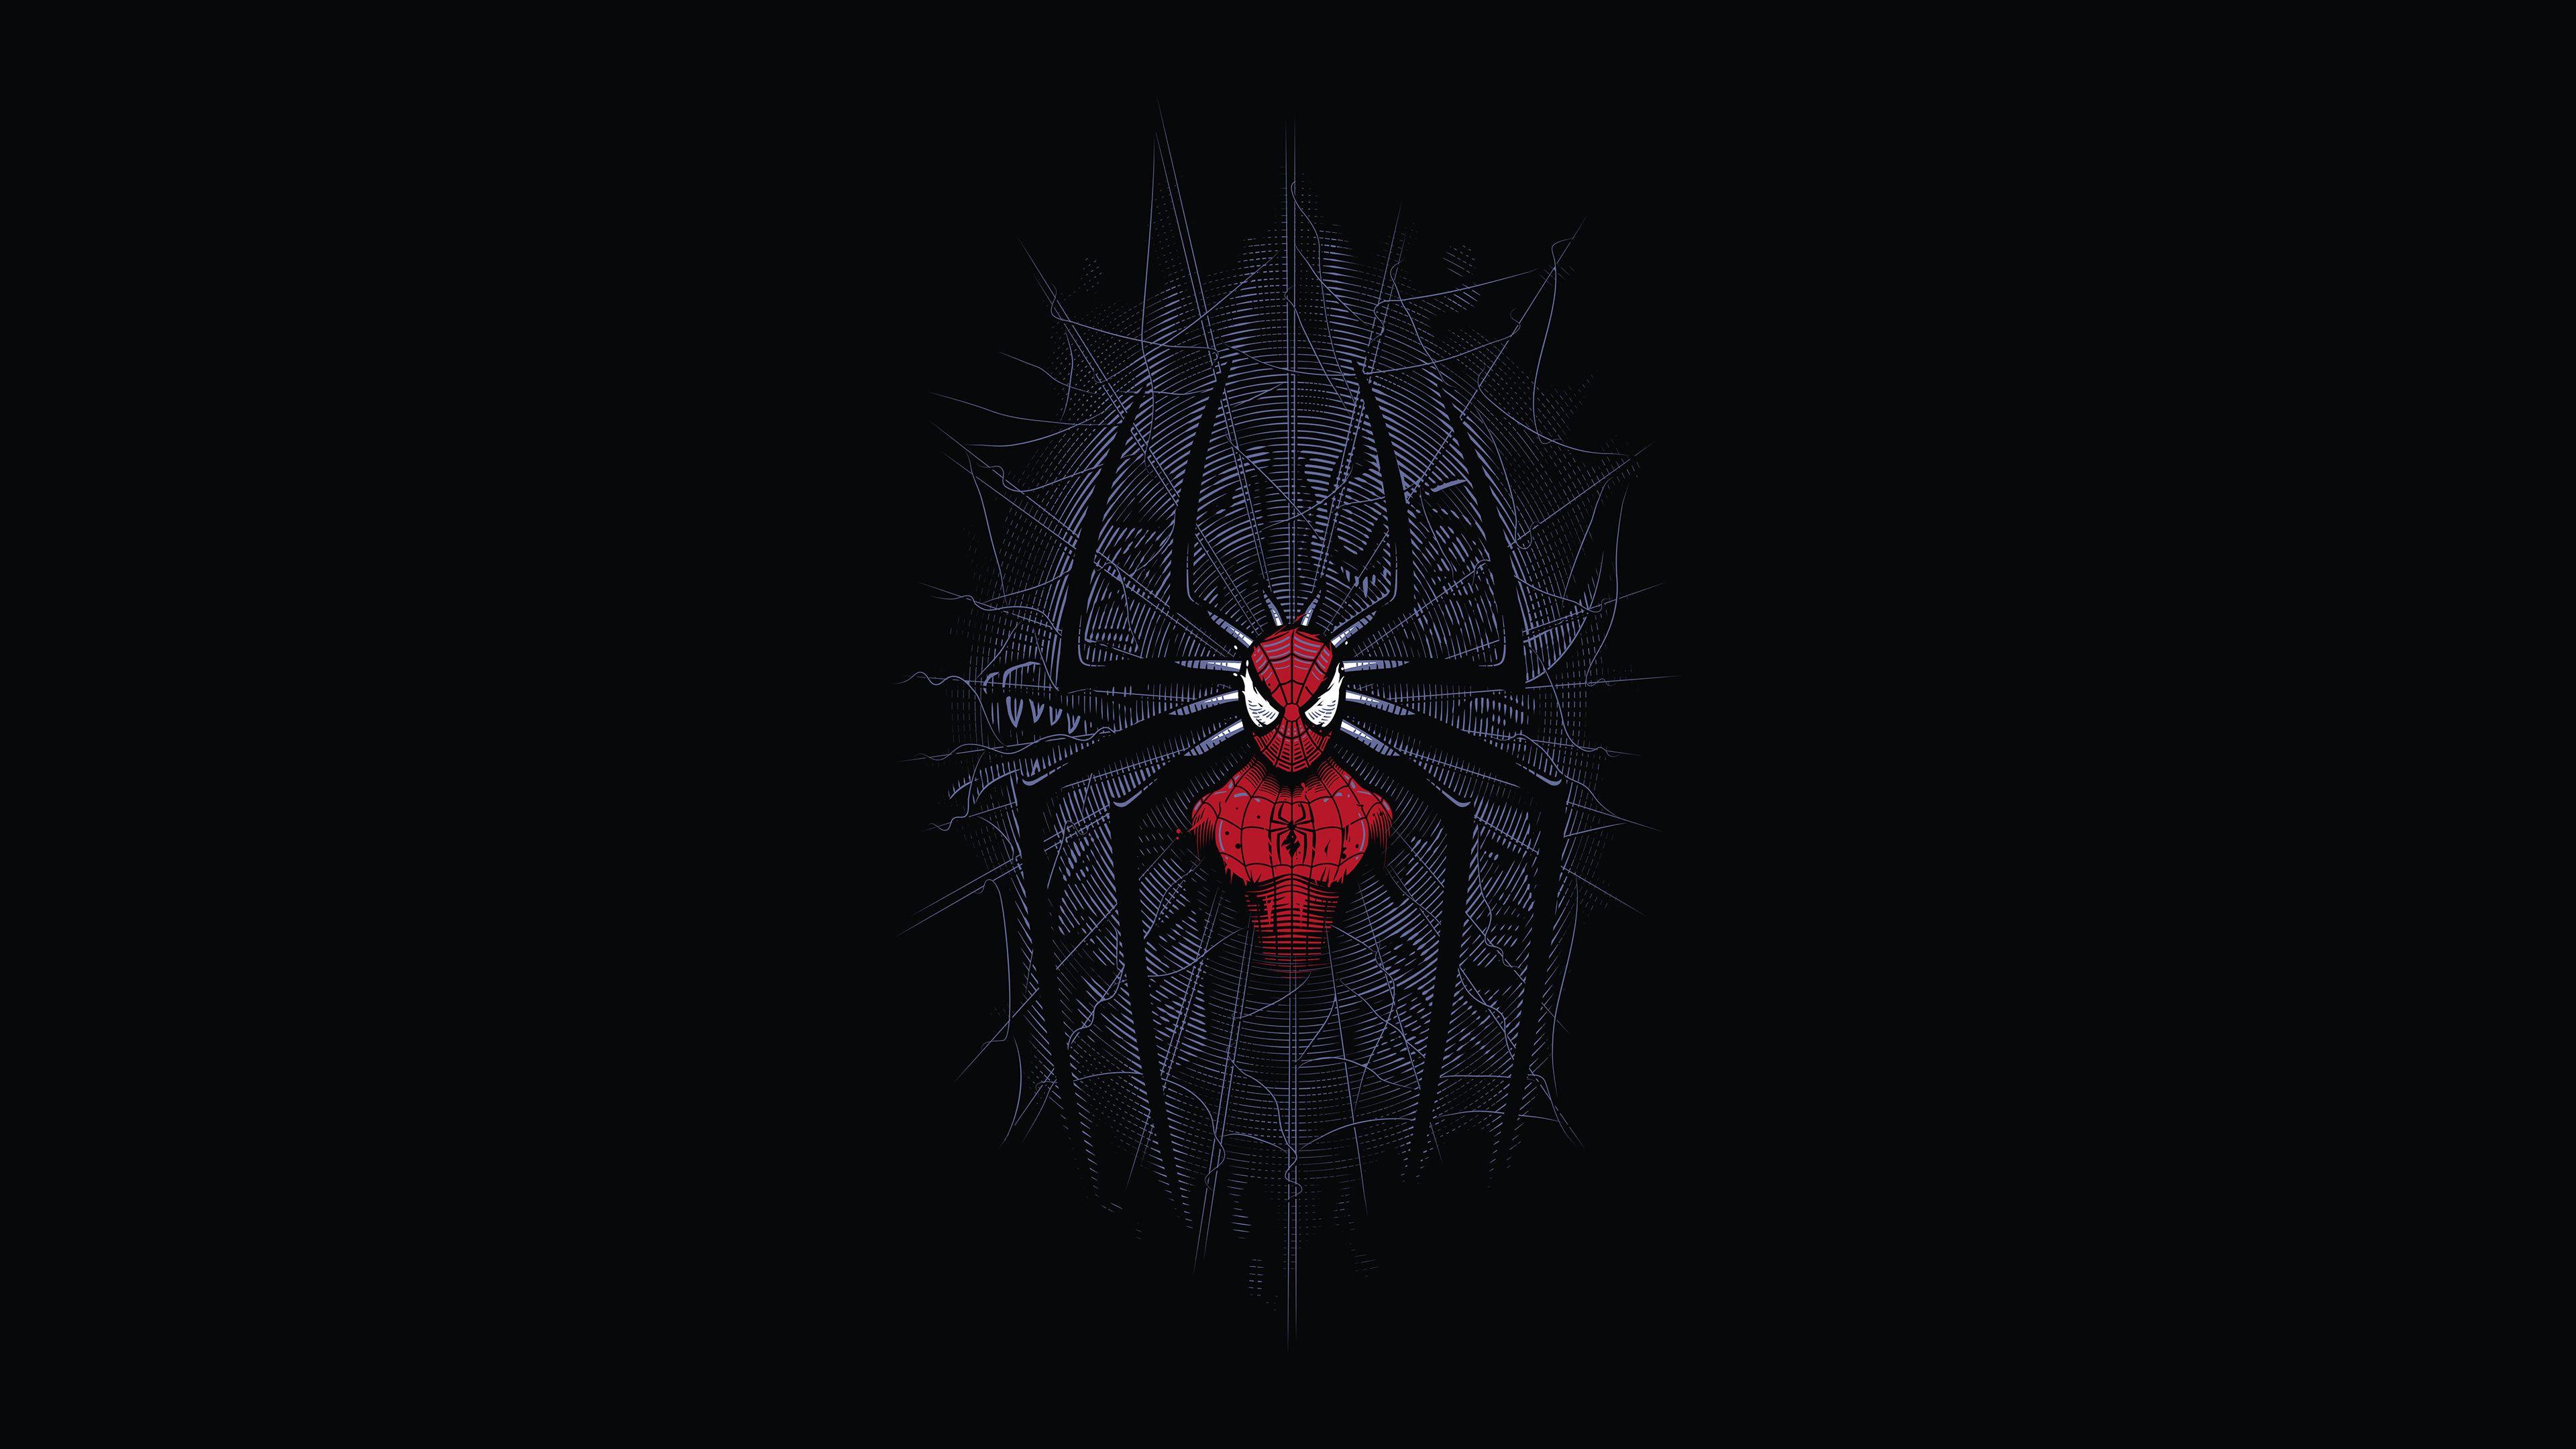 Download 3840x2160 Wallpaper Spider Man, Dark, Minimalist, Digital